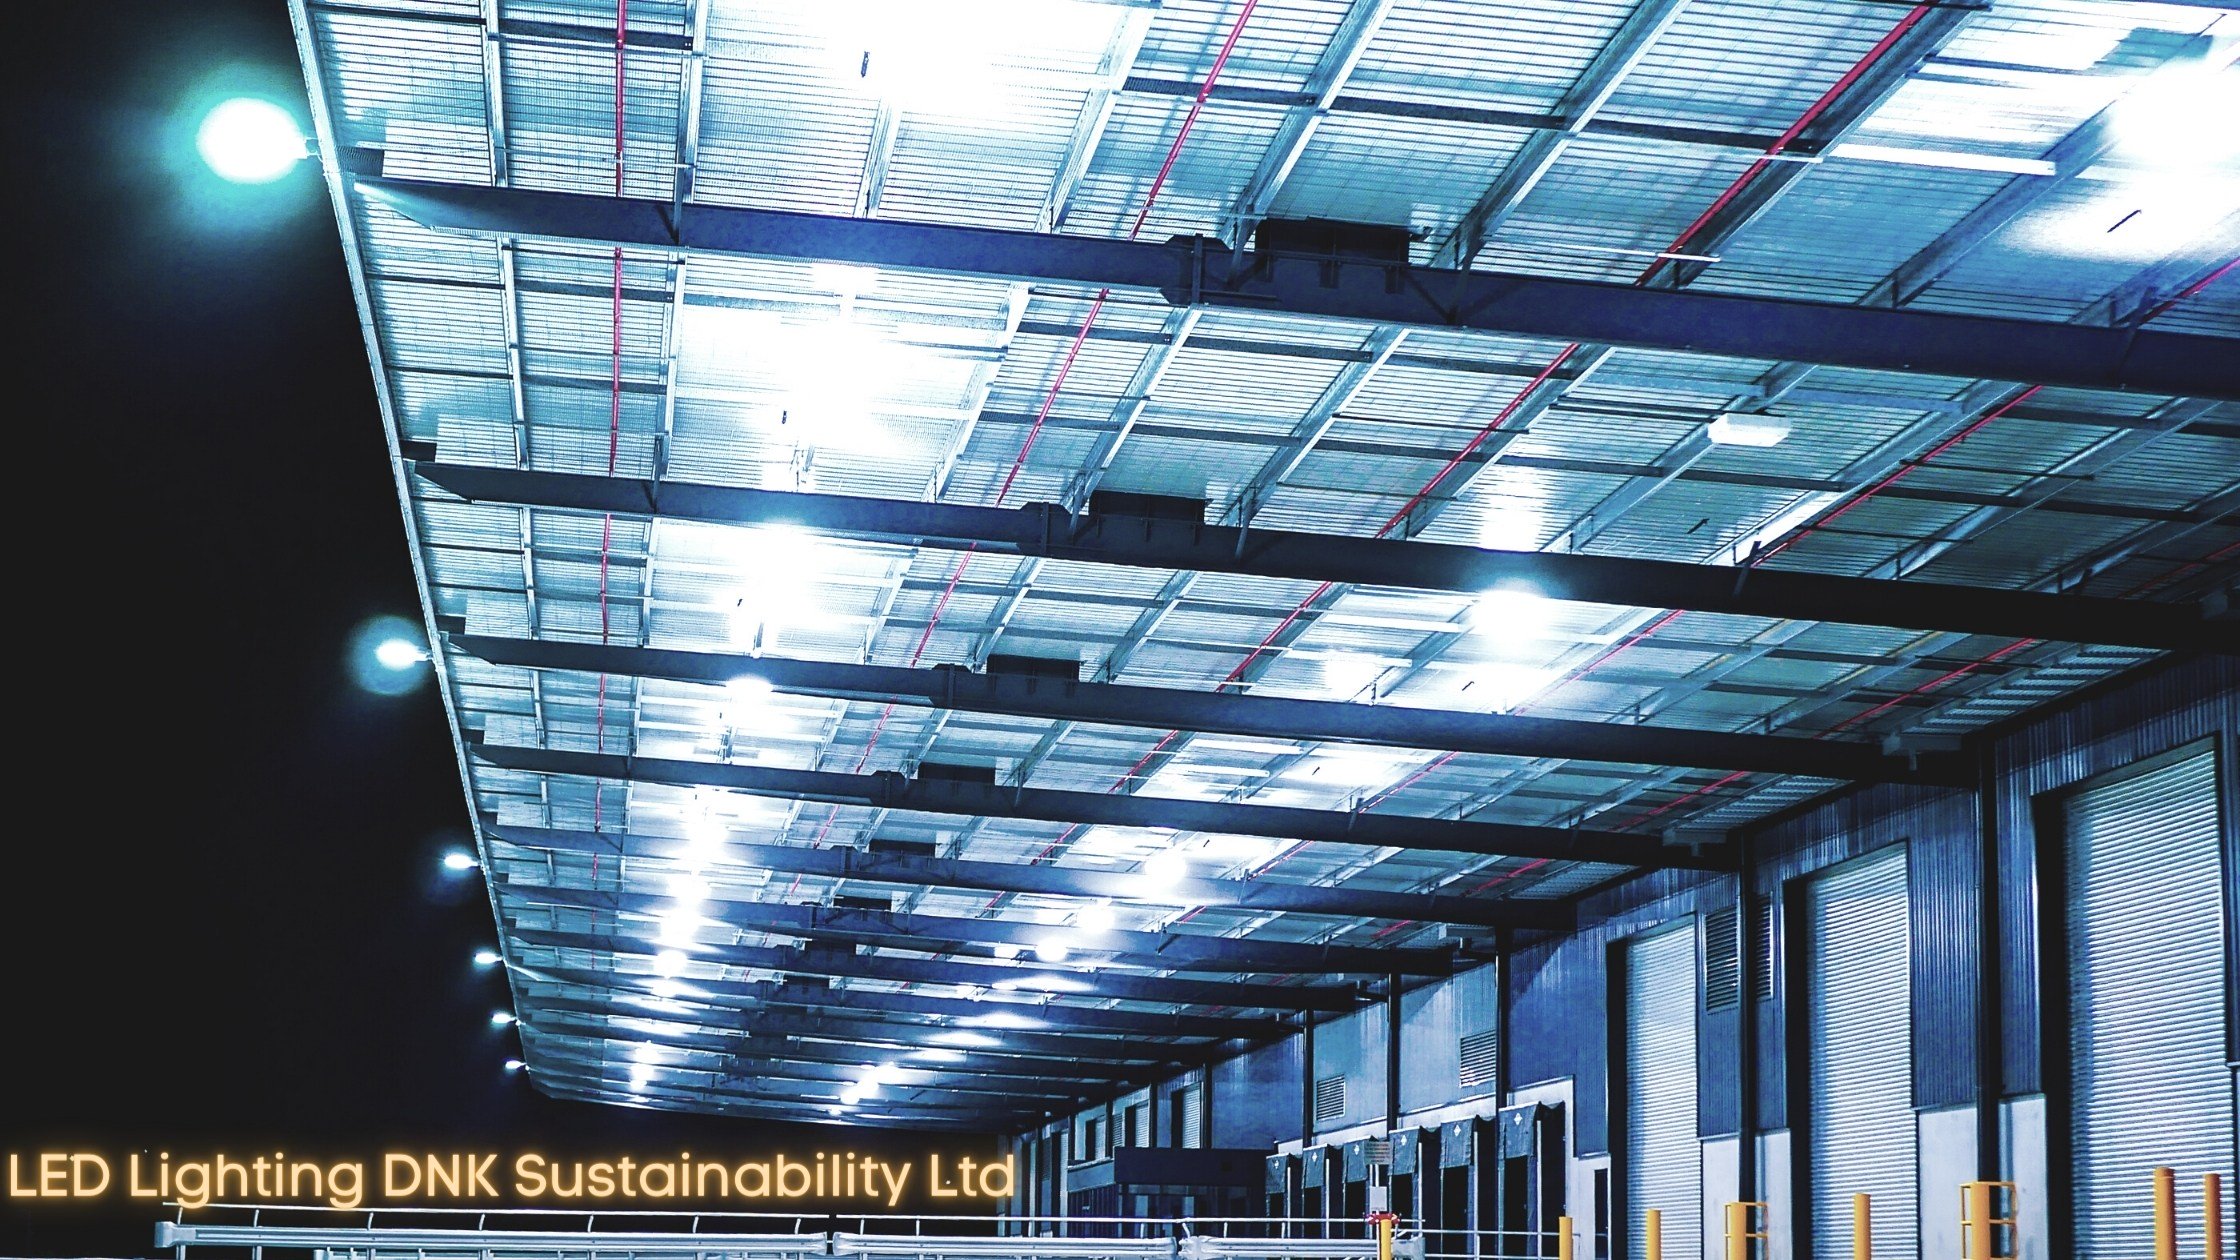 LED Lighting DNK Sustainability Ltd